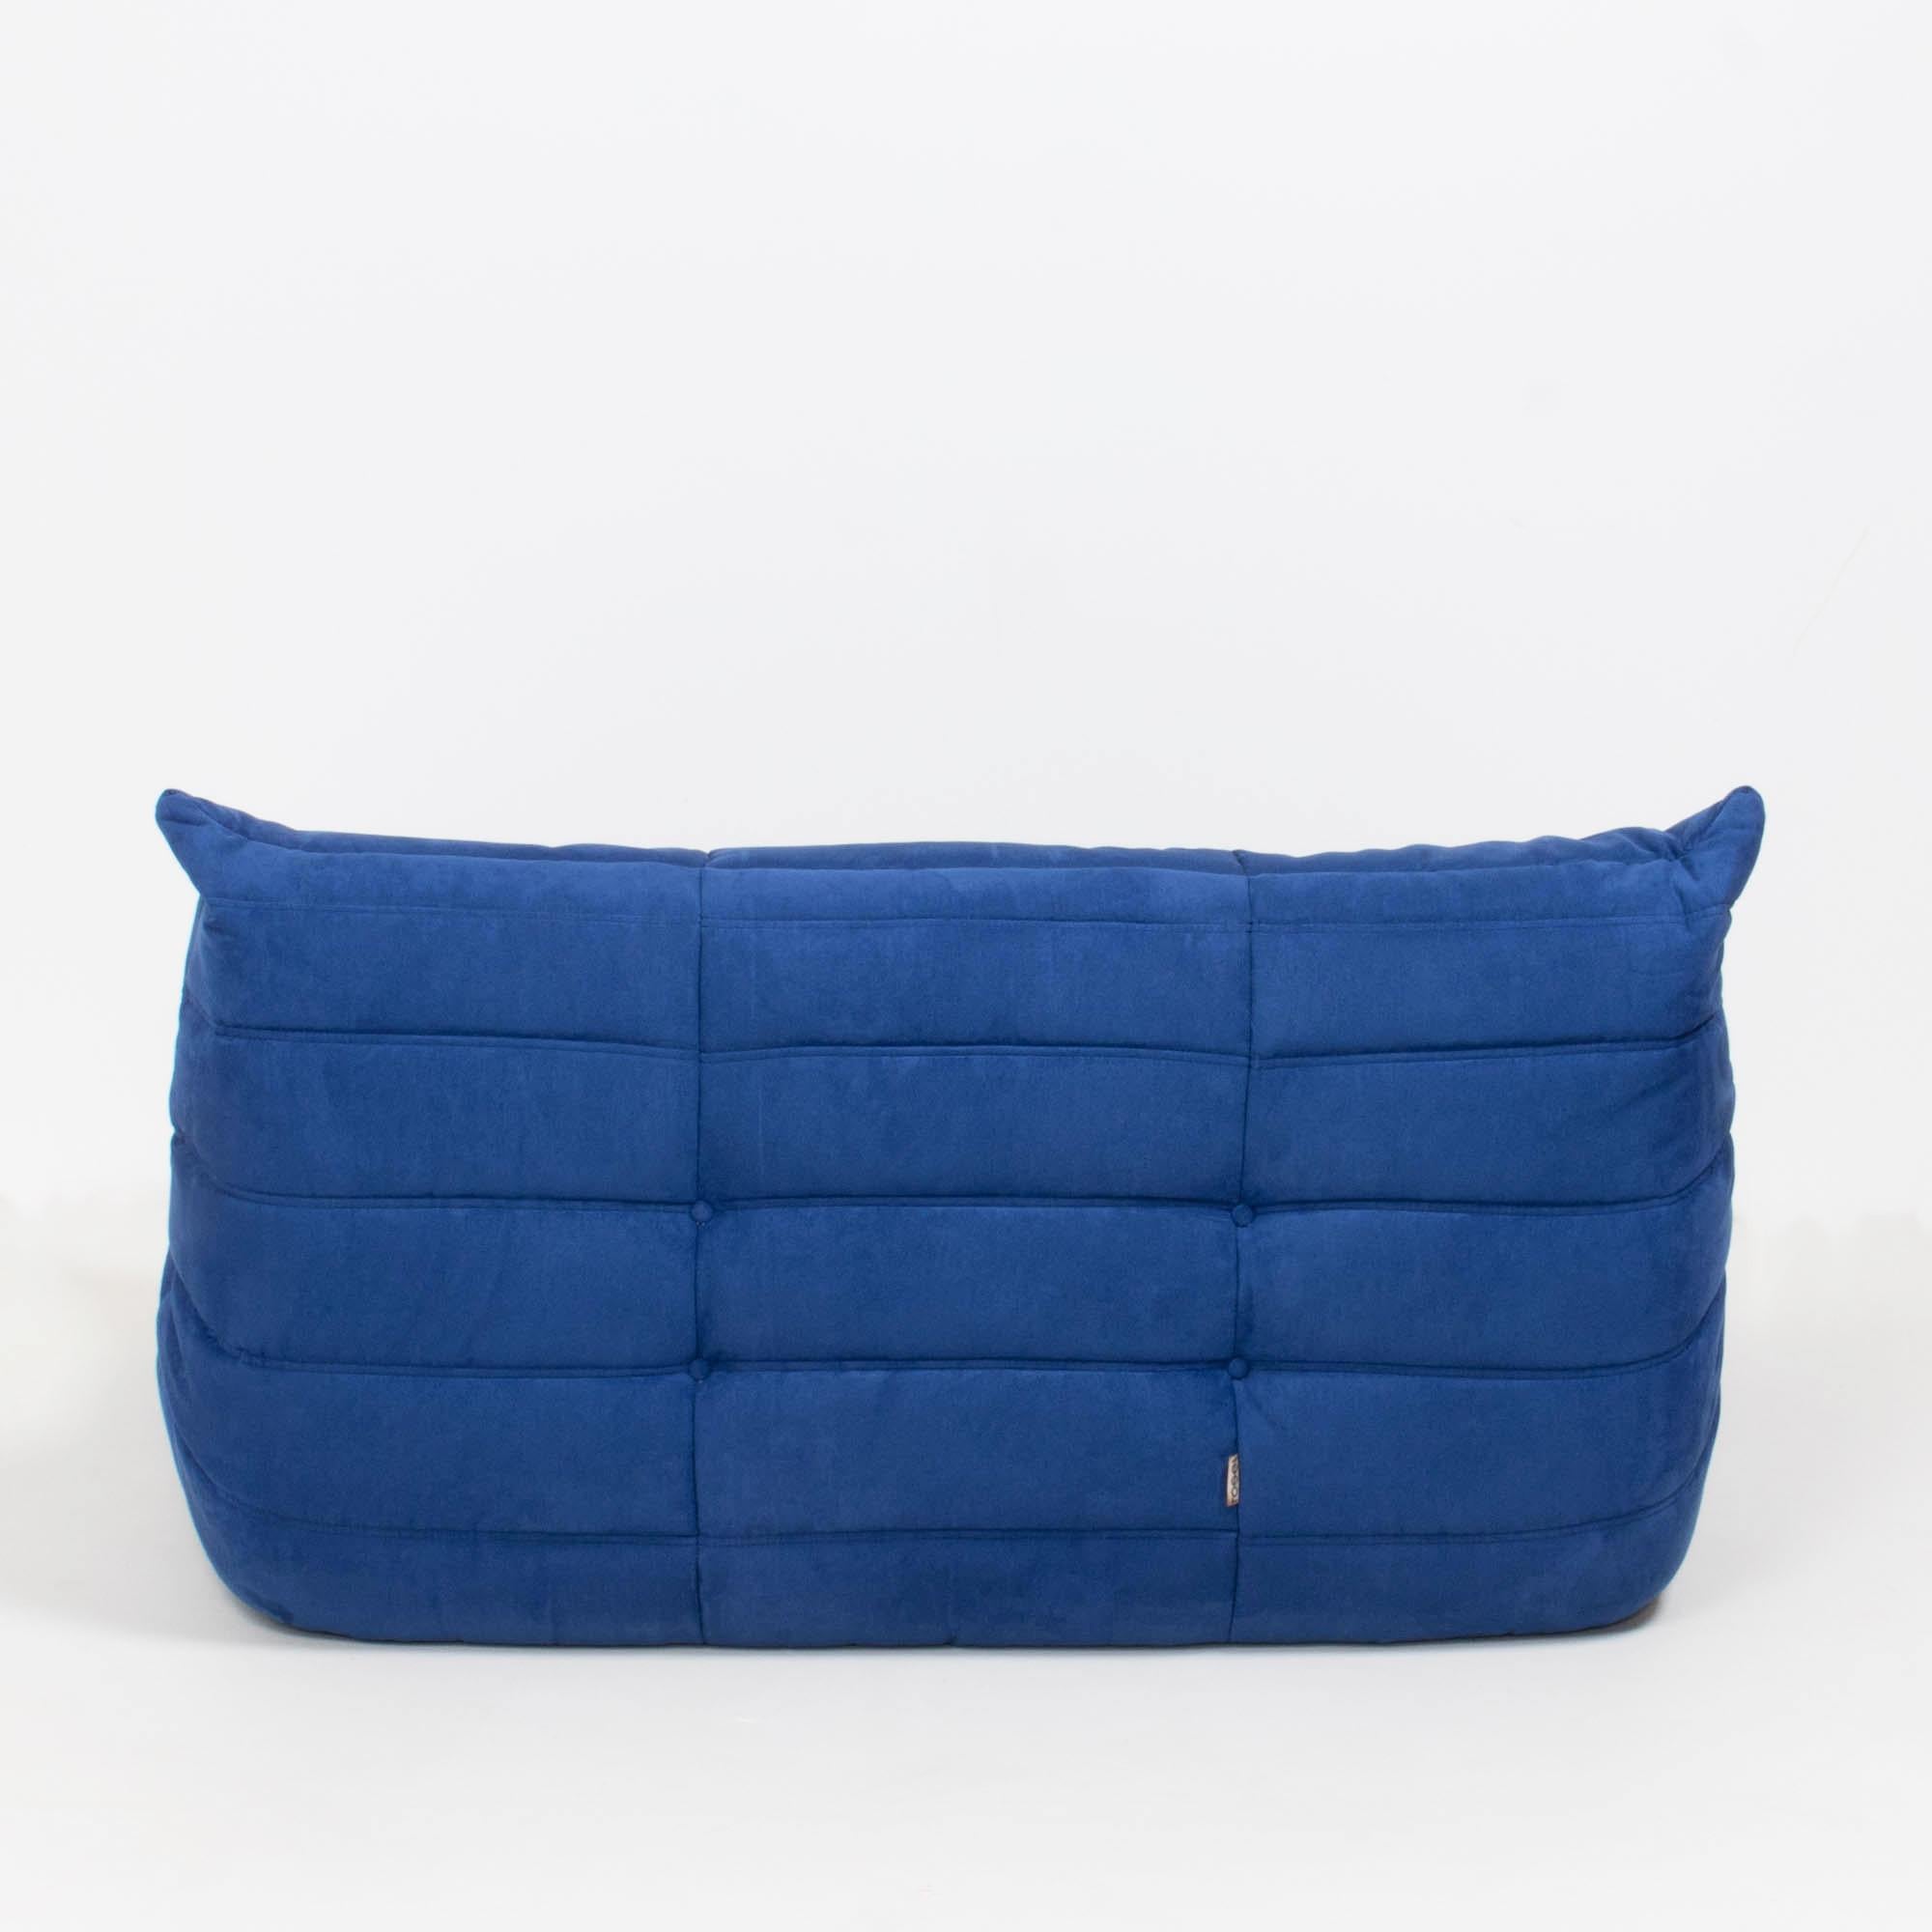 Fabric Michel Ducaroy for Ligne Roset Togo Blue Modular Sofa, Set of 3